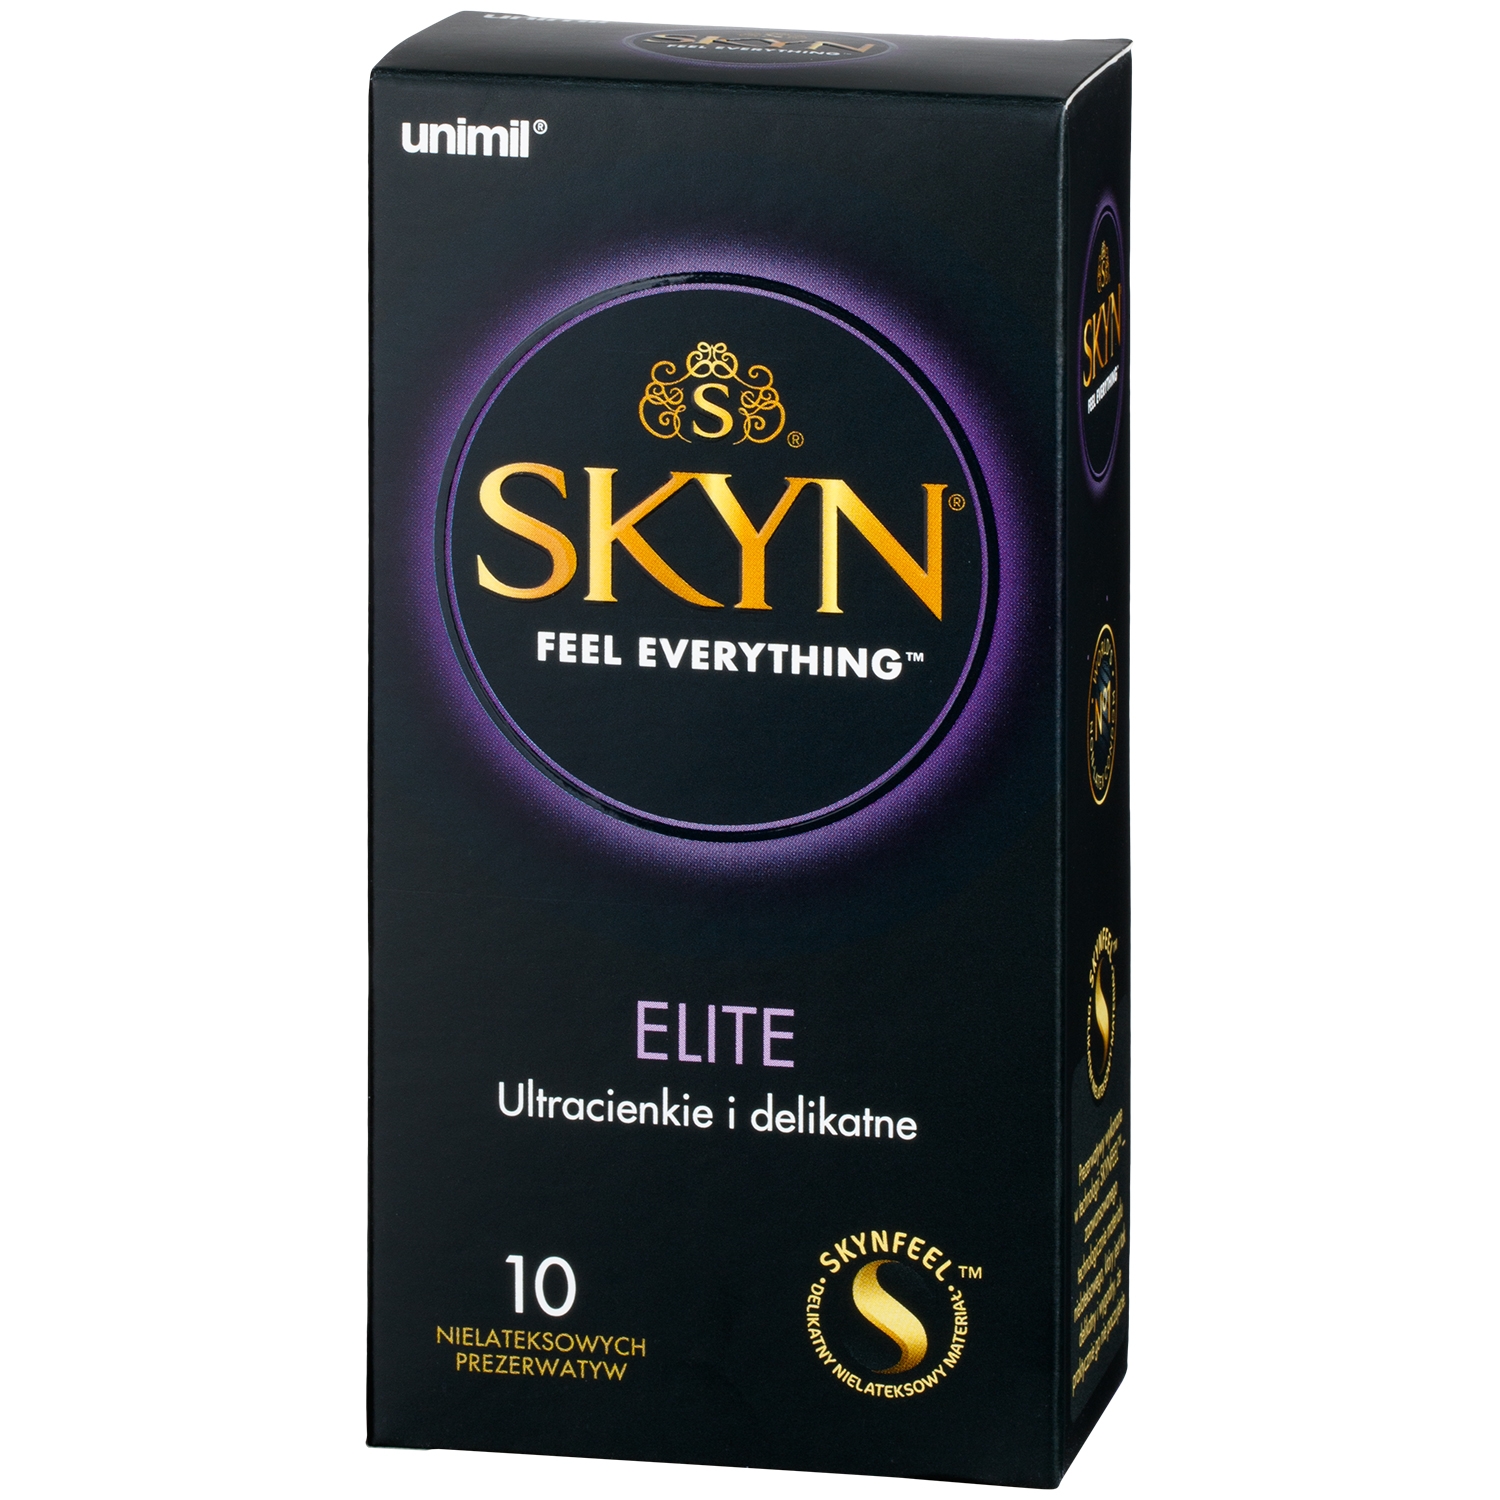 SKYN Elite Latexfri Kondomer 10 stk - Klar